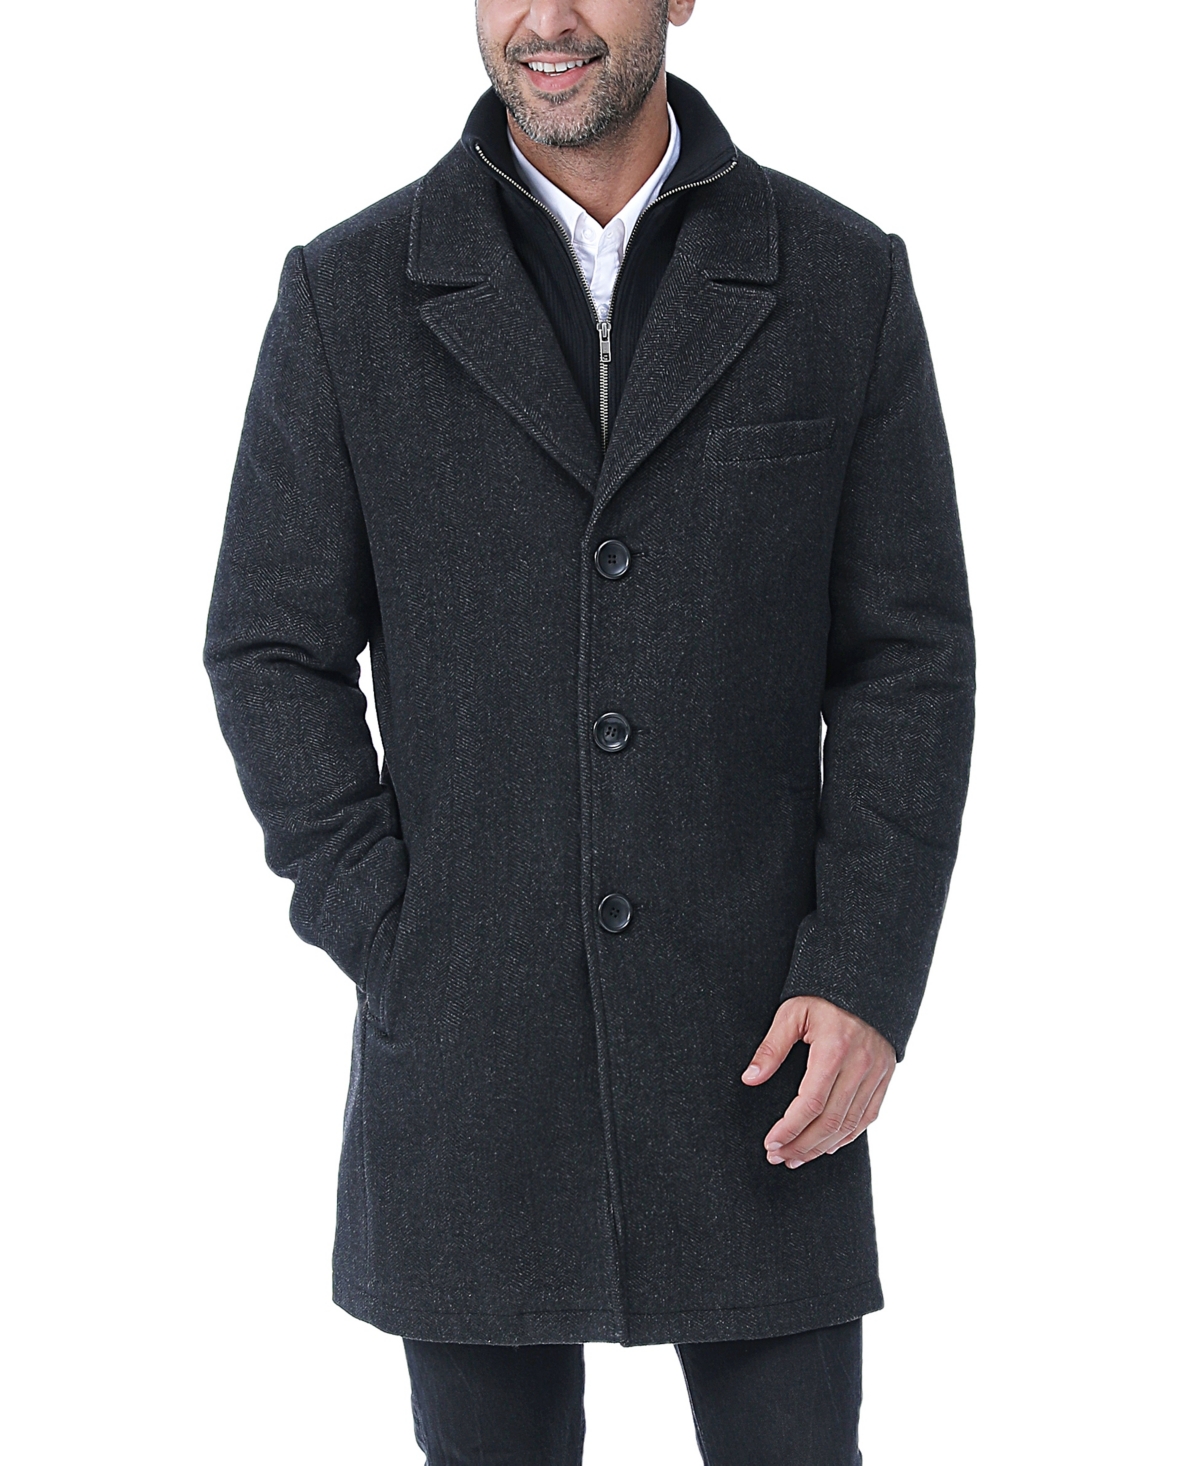 Men Leon Herringbone Wool Blend Coat with Bib - Big and Tall - Black